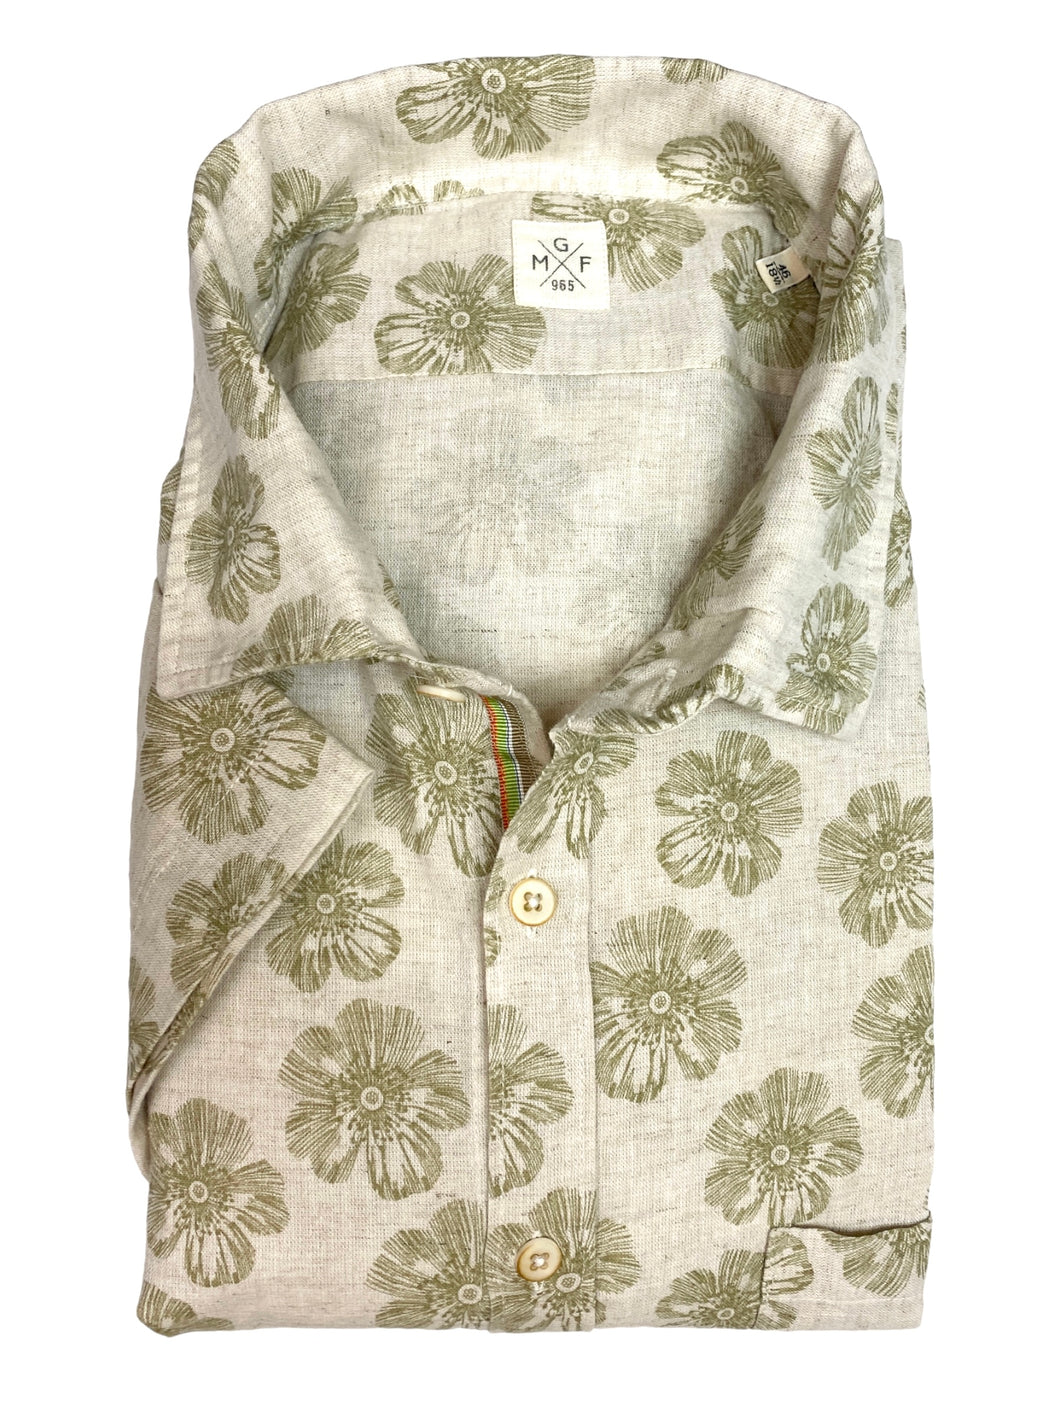 GMF 965 Short Sleeve Linen/Cotton Shirt Olive Floral